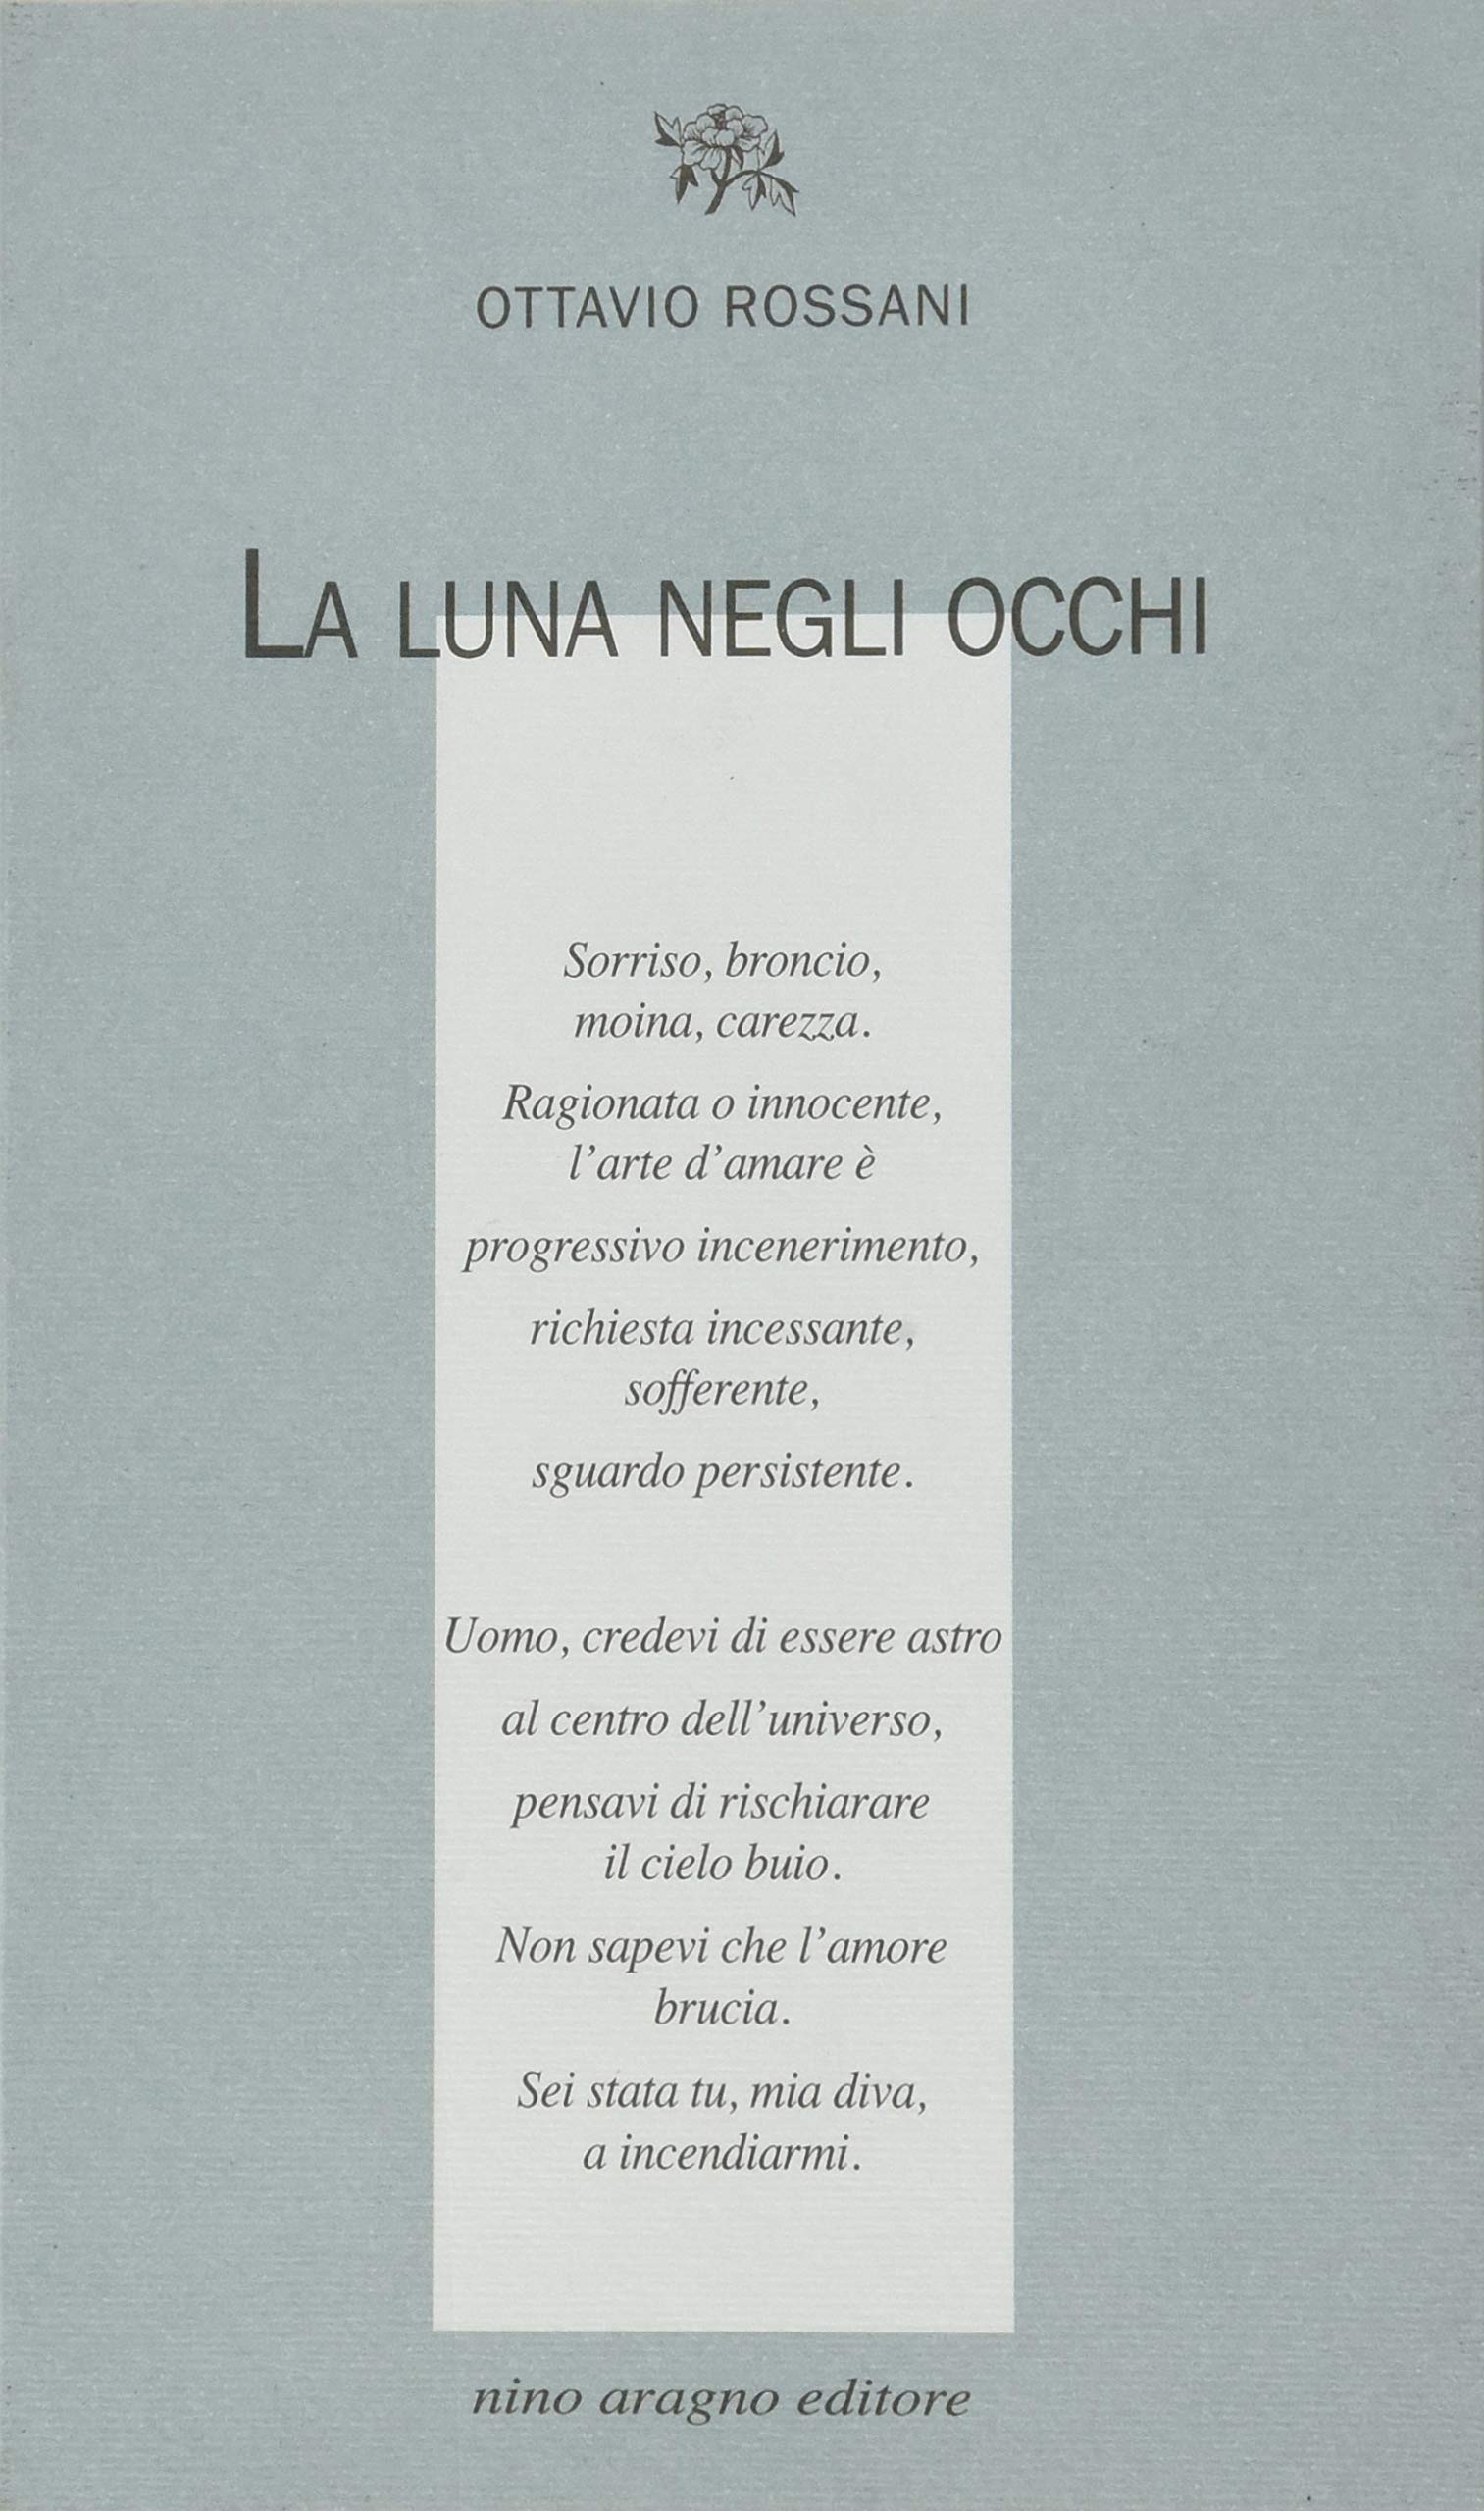 Le poesie d'amore di Ottavio Rossani - PoesiaPoesia